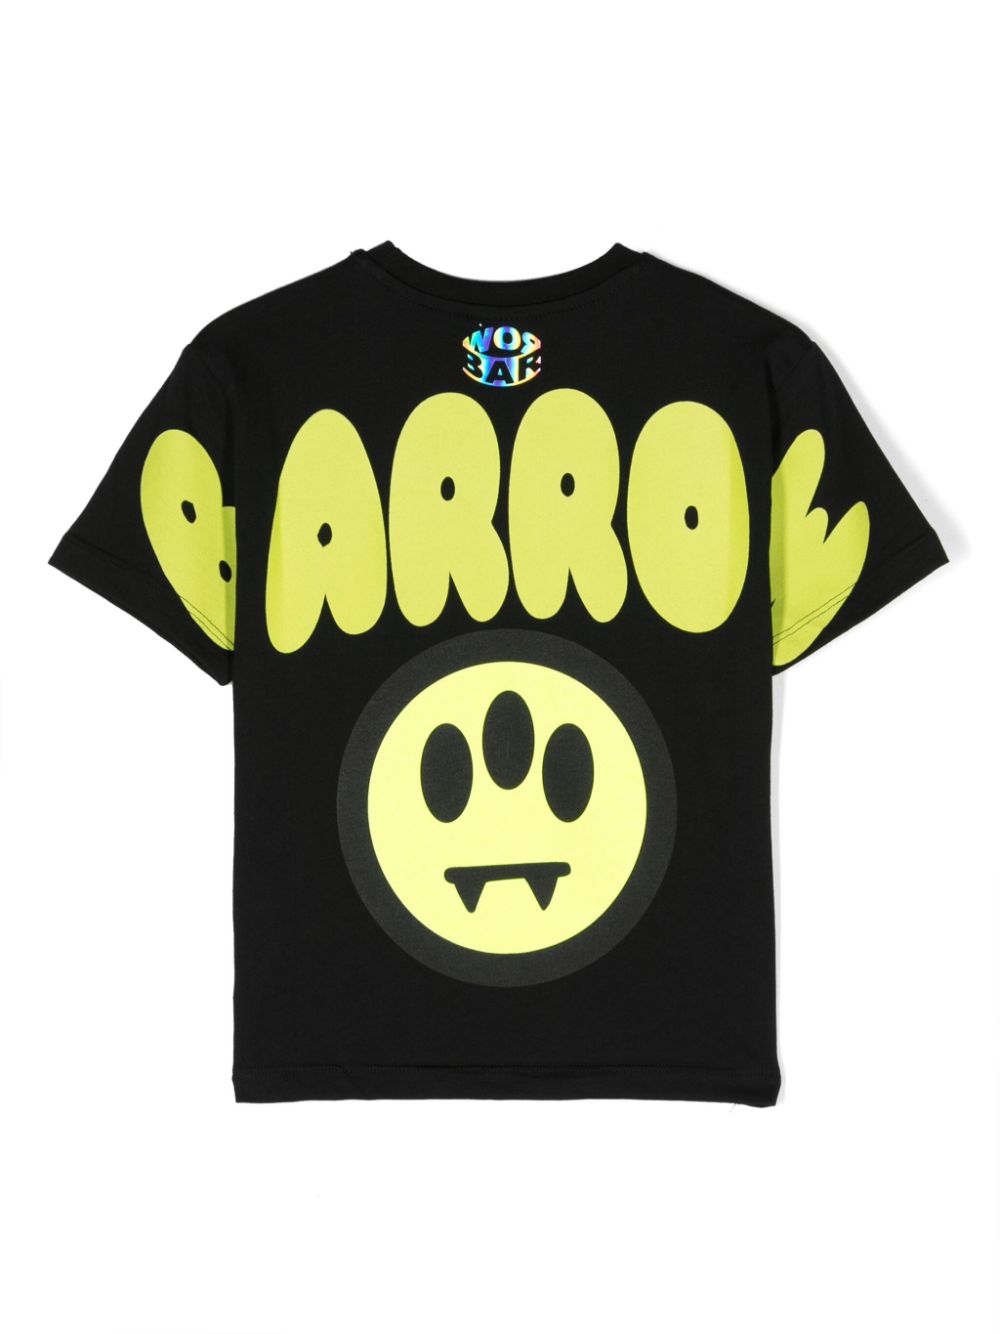 Barrow kids t-shirt con stampa